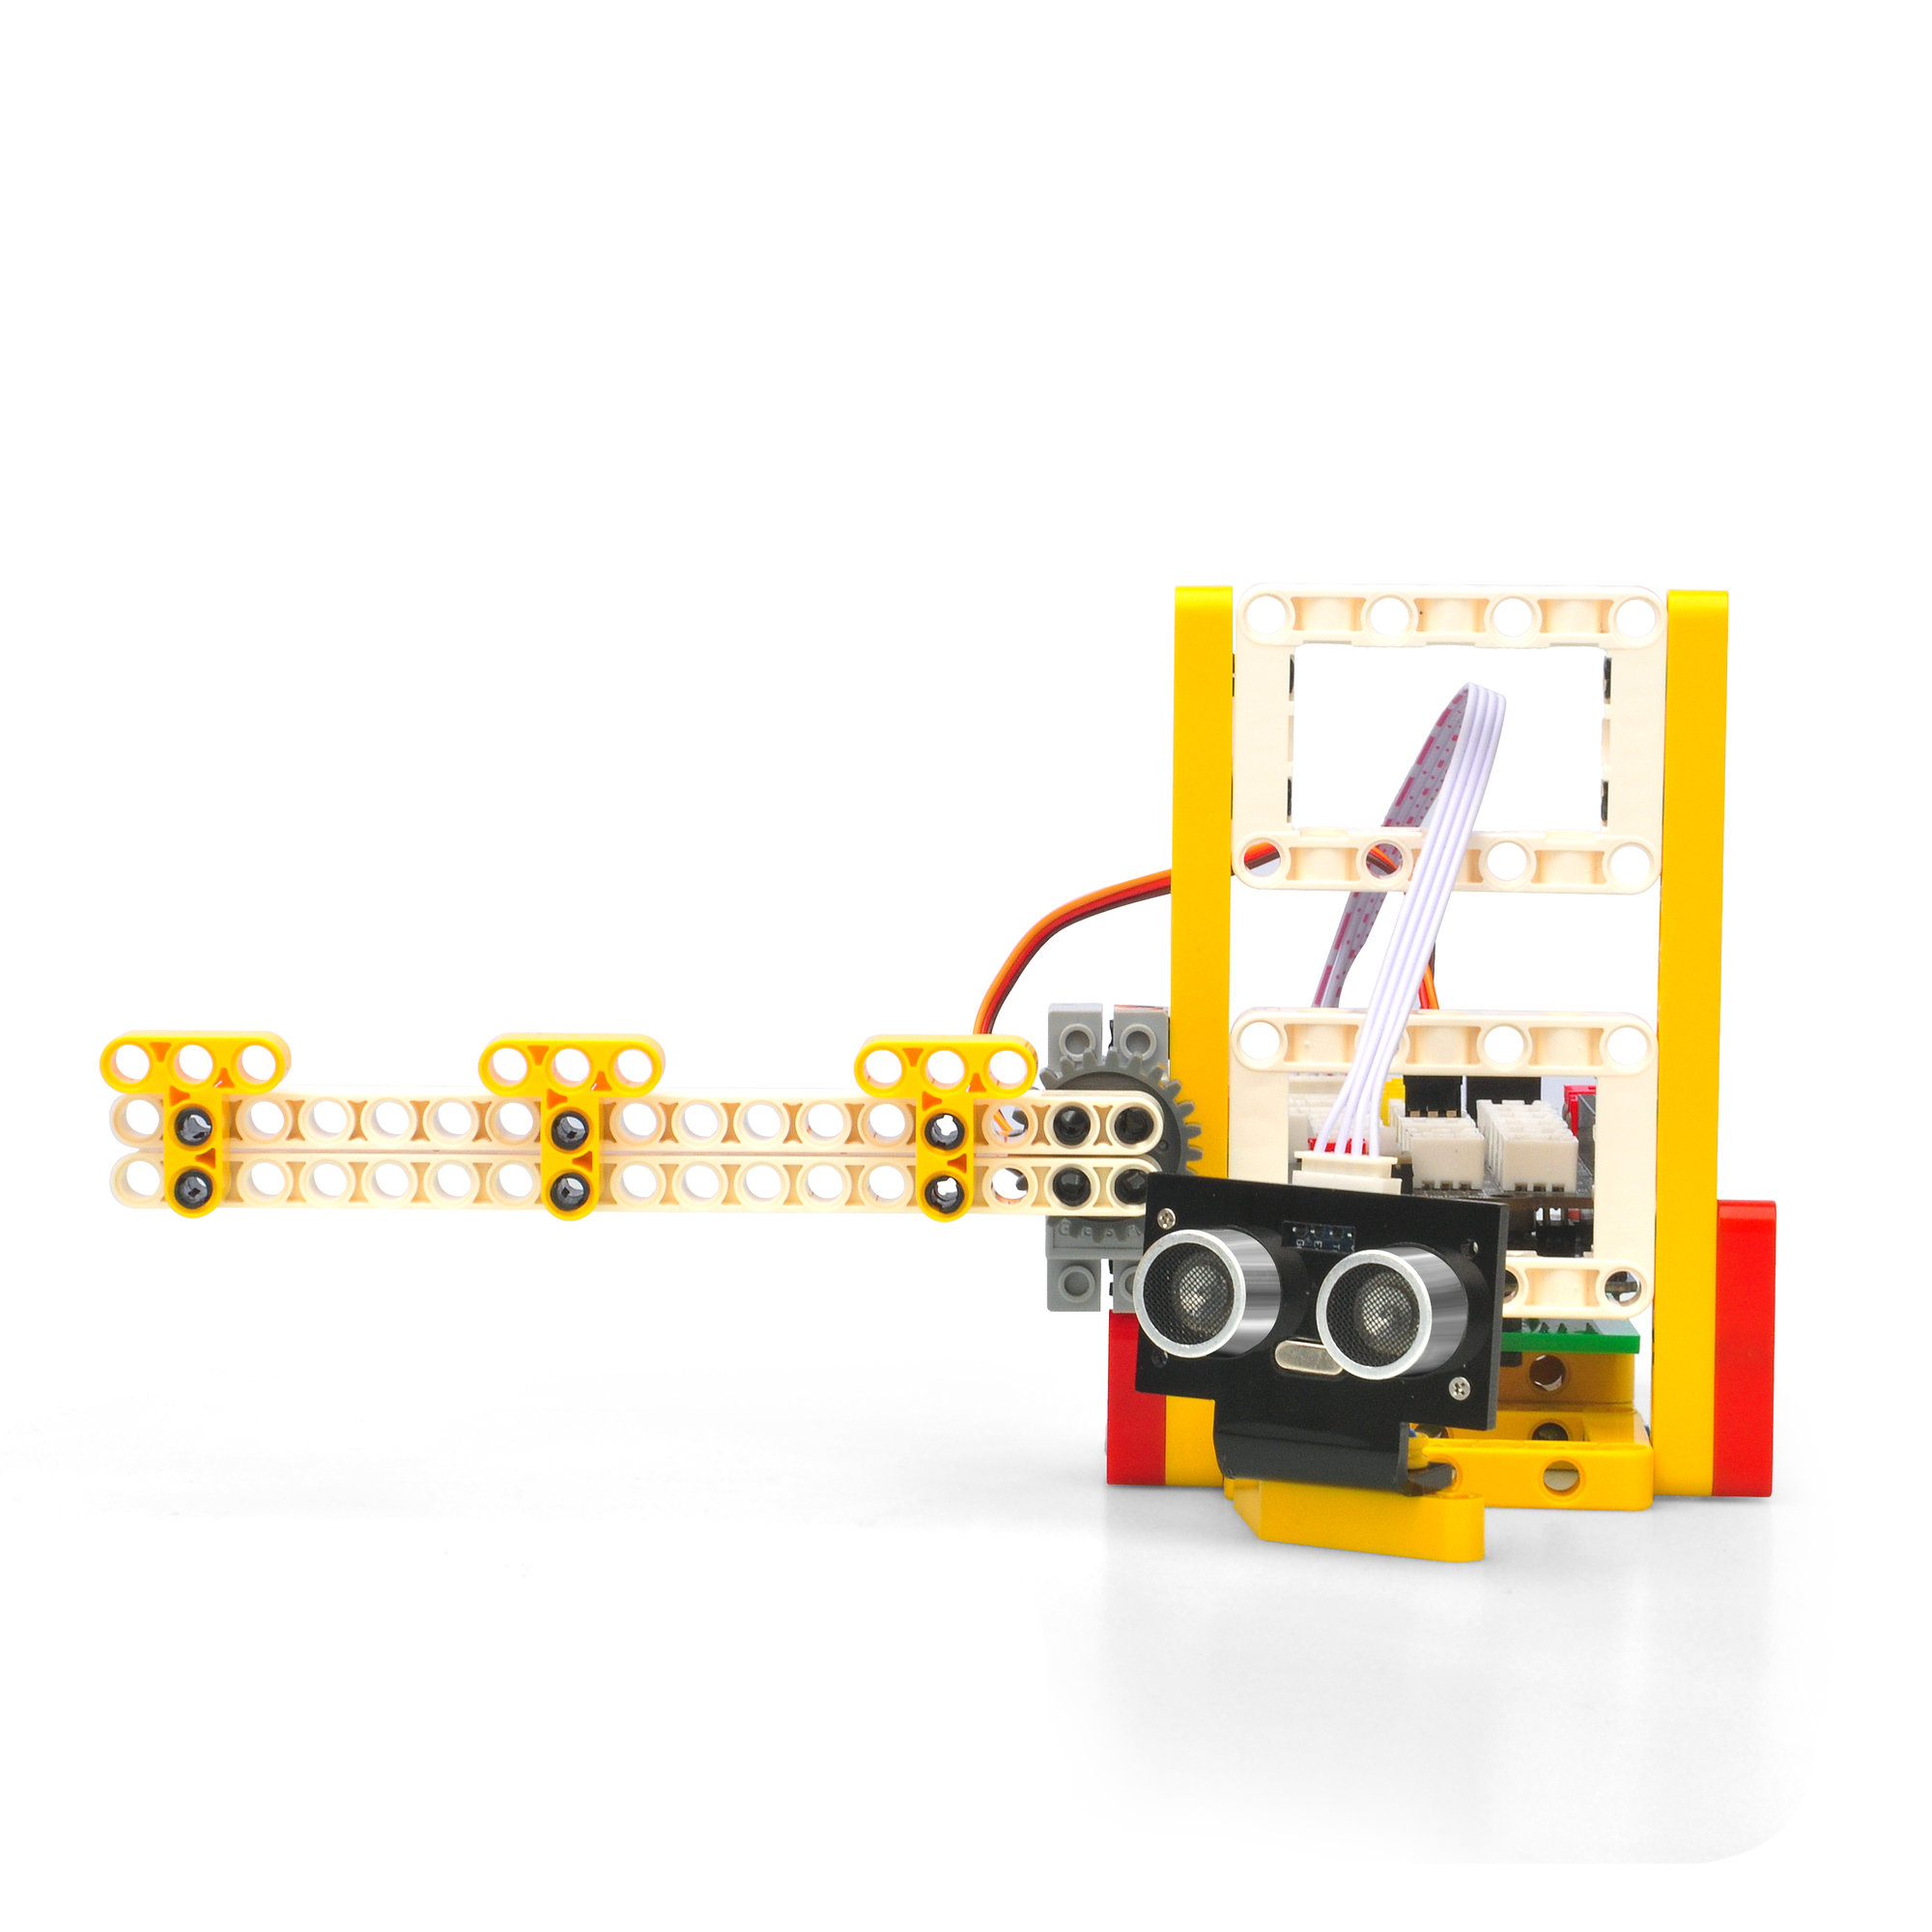 OSOYOO Building Block DIY Programming Kit for Arduino 1: Smart Gate